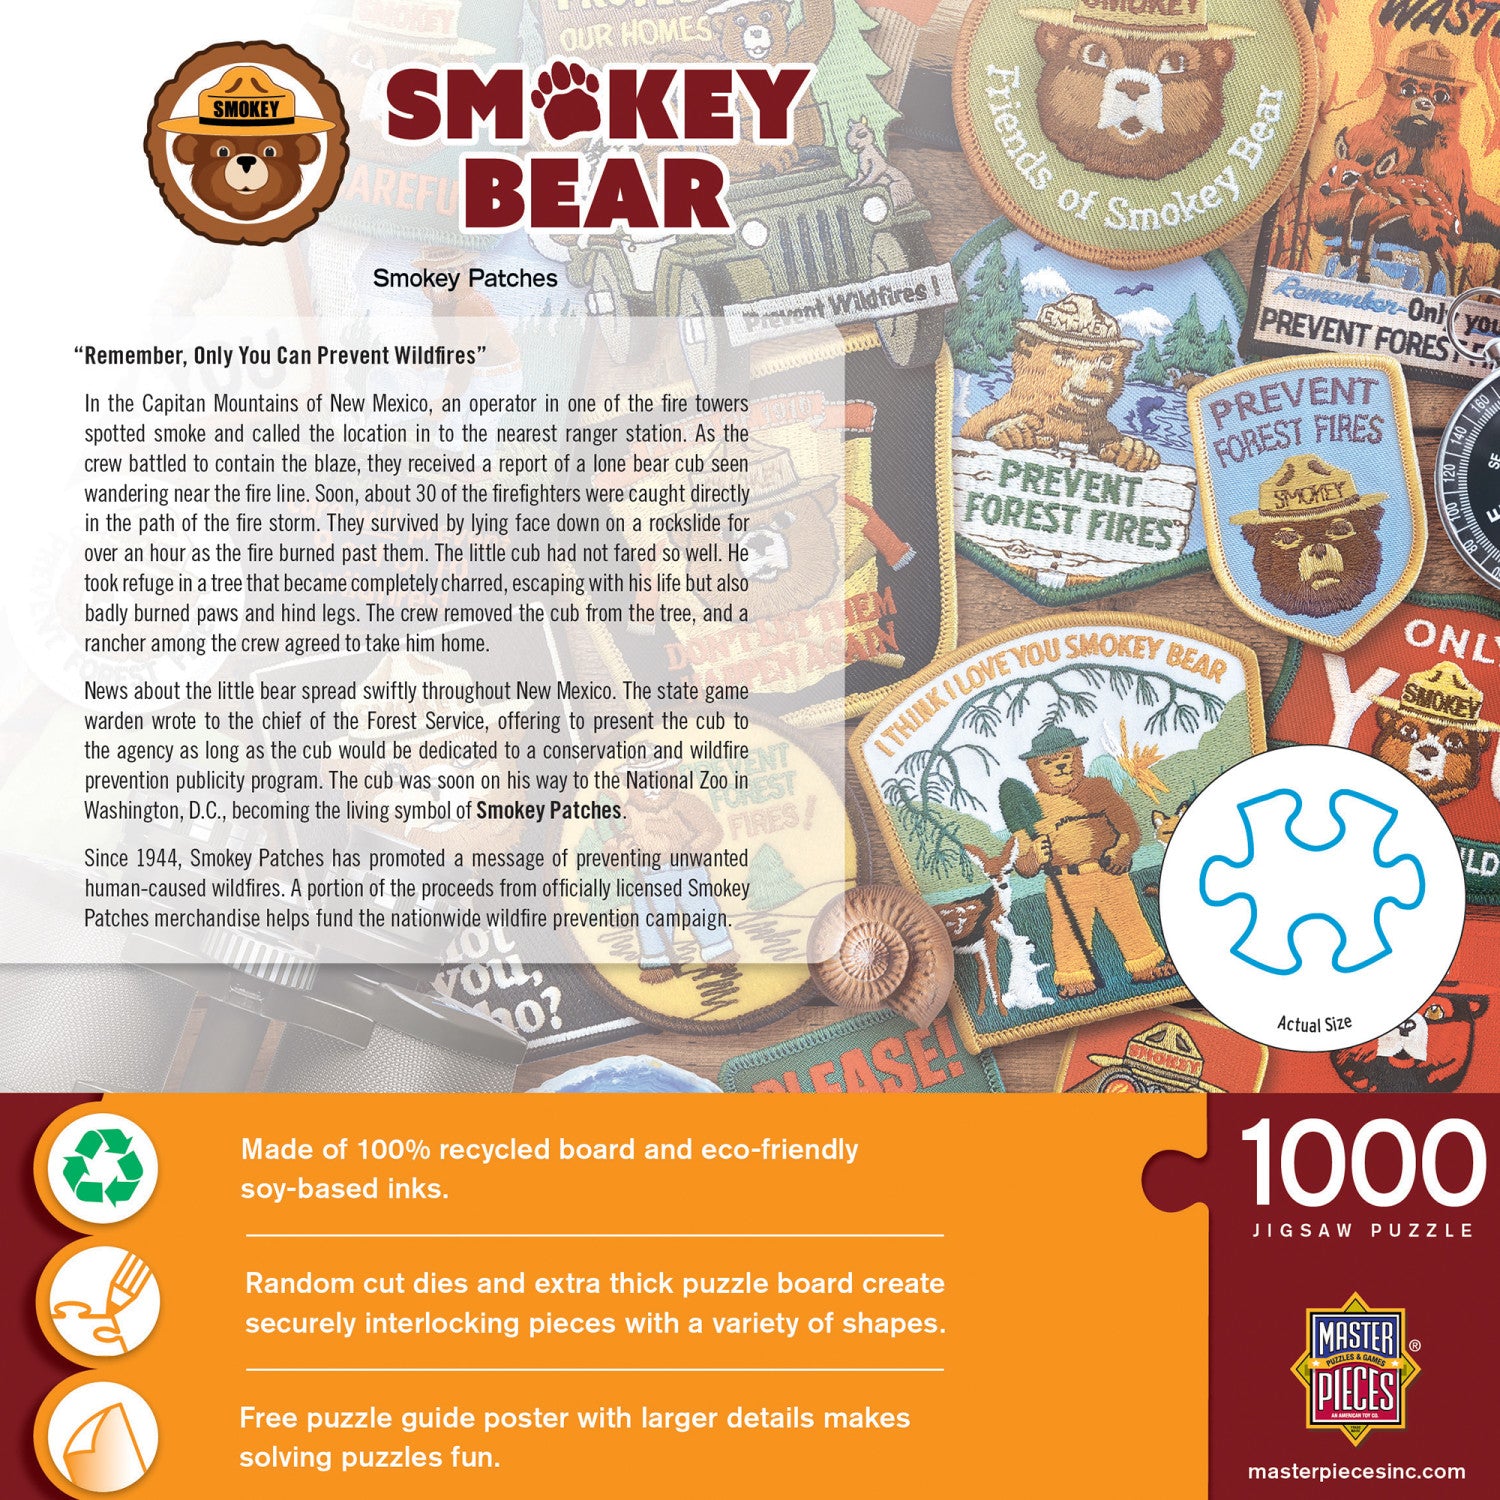 Smokey Bear Patches 1000 Piece Jigsaw Puzzle